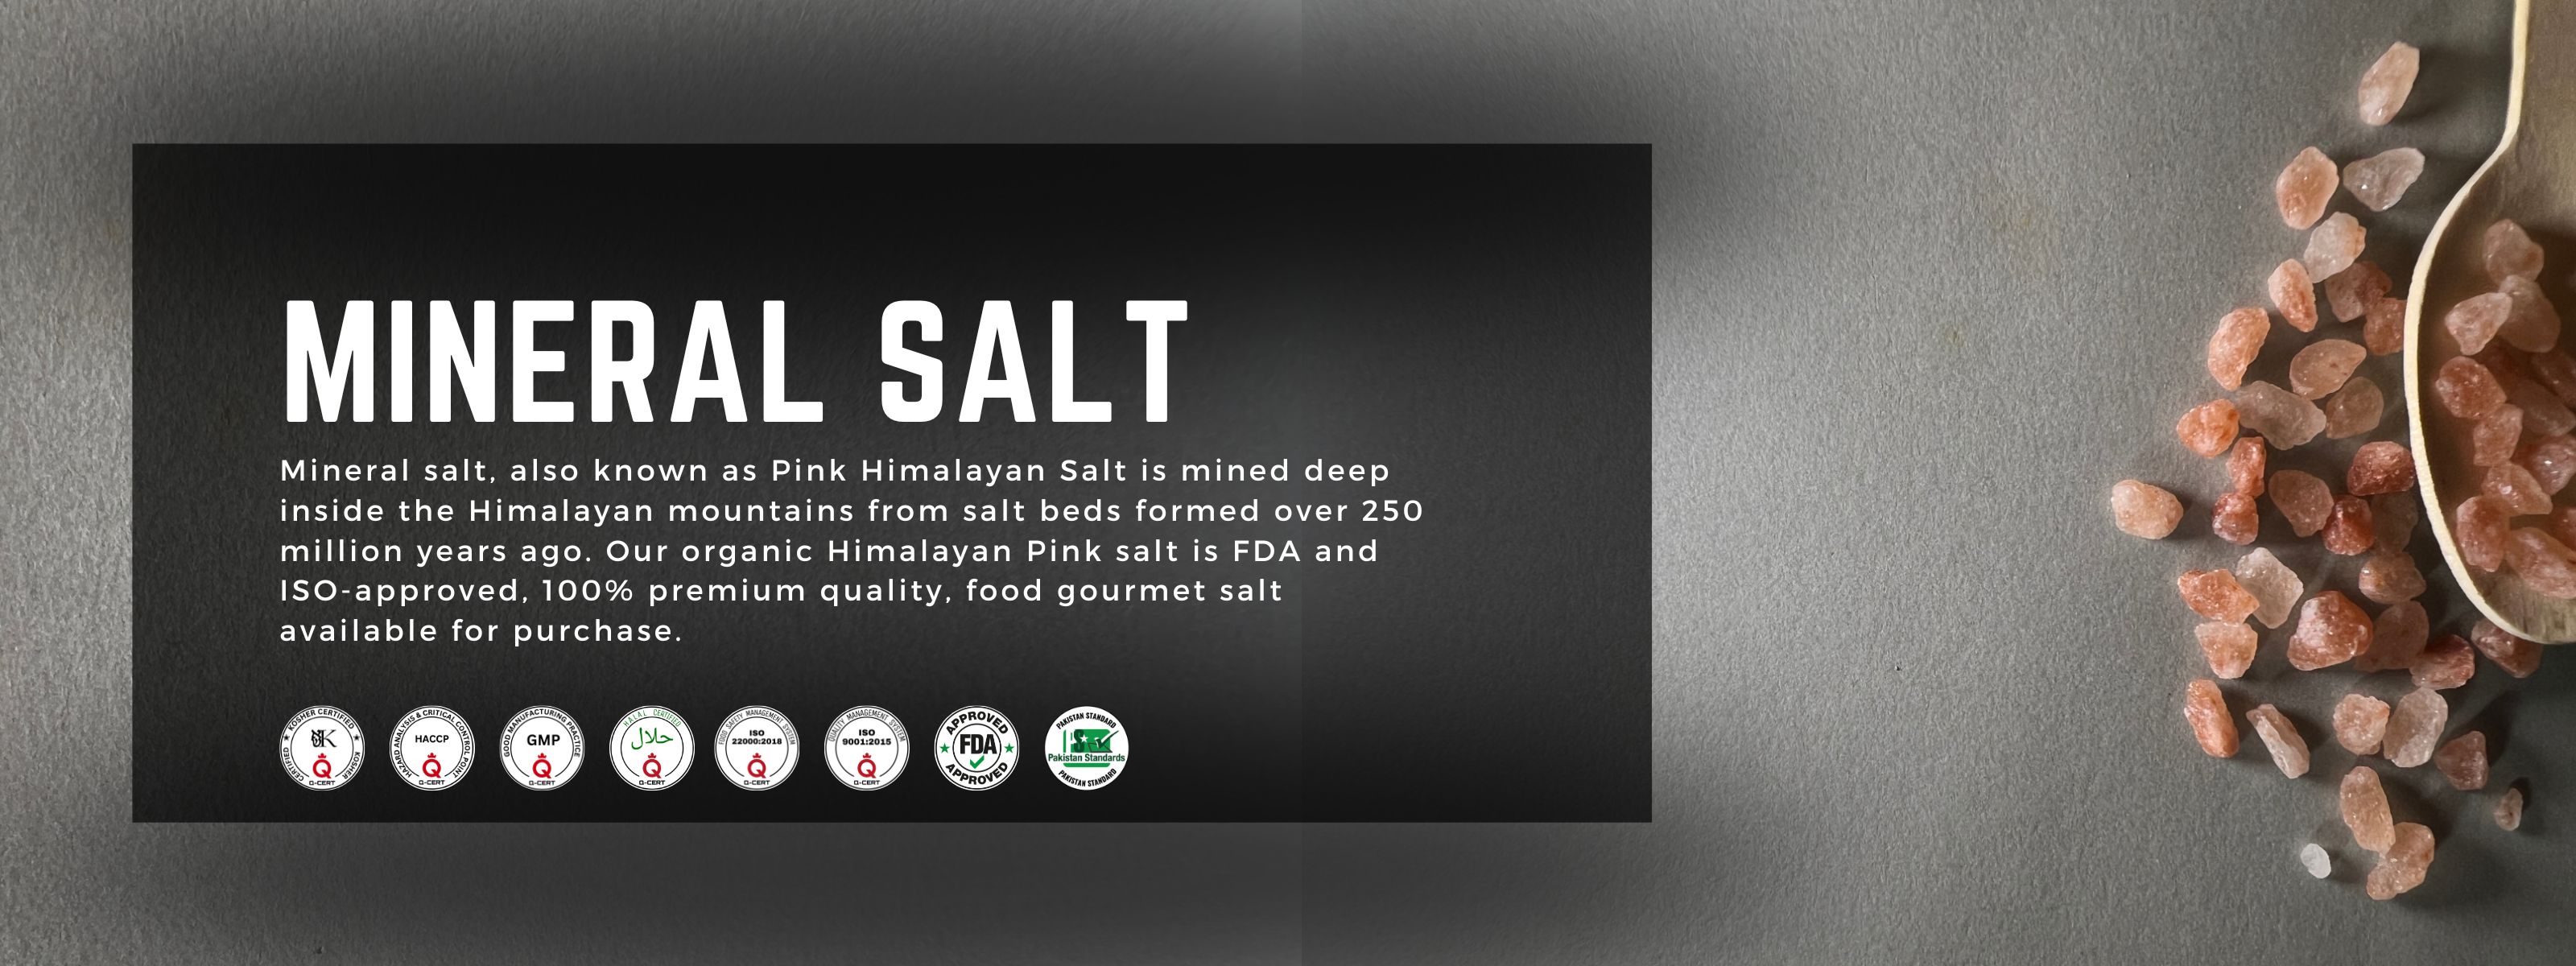 Rock Salt, Mineral Salt, Gourmet salt, Ancient Mineral Sea Salt, wholesale Gourmet salt,Gourmet Sea salt, Edible Pink Salt, organic spices, flavored salt, Pink Himalayan salt.Healthy salts.png